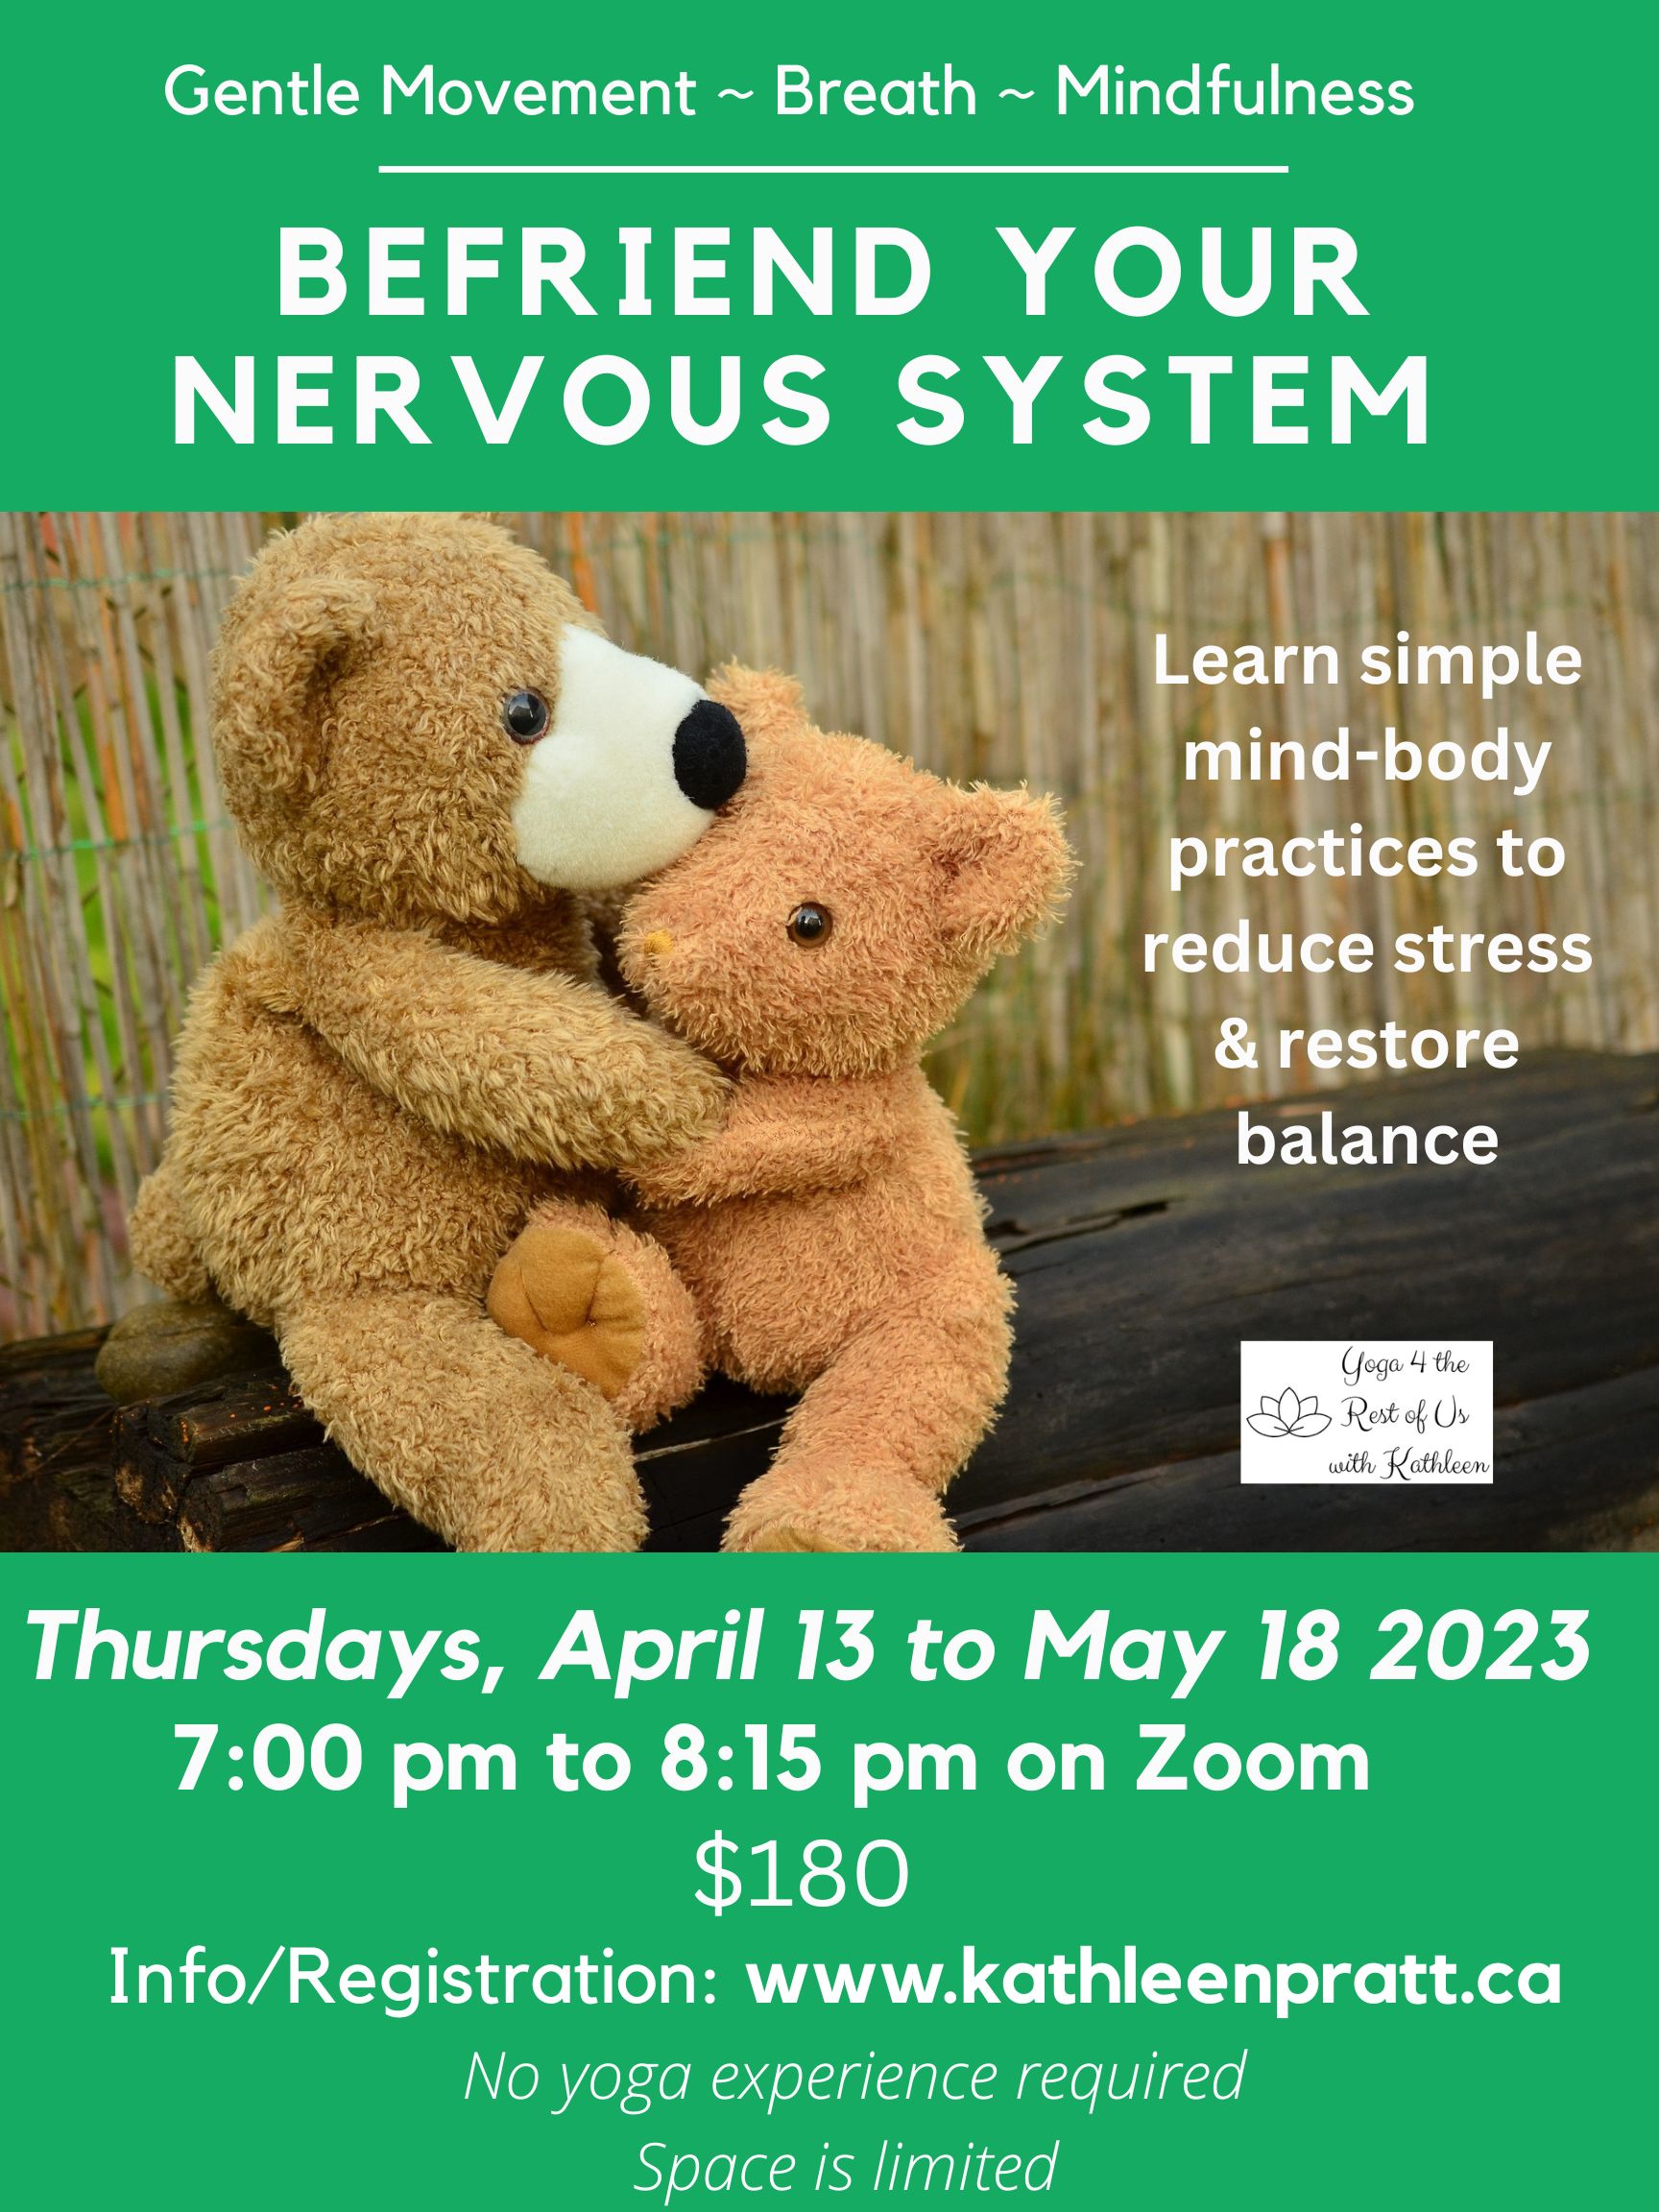 Befriend Your Nervous System revised poster